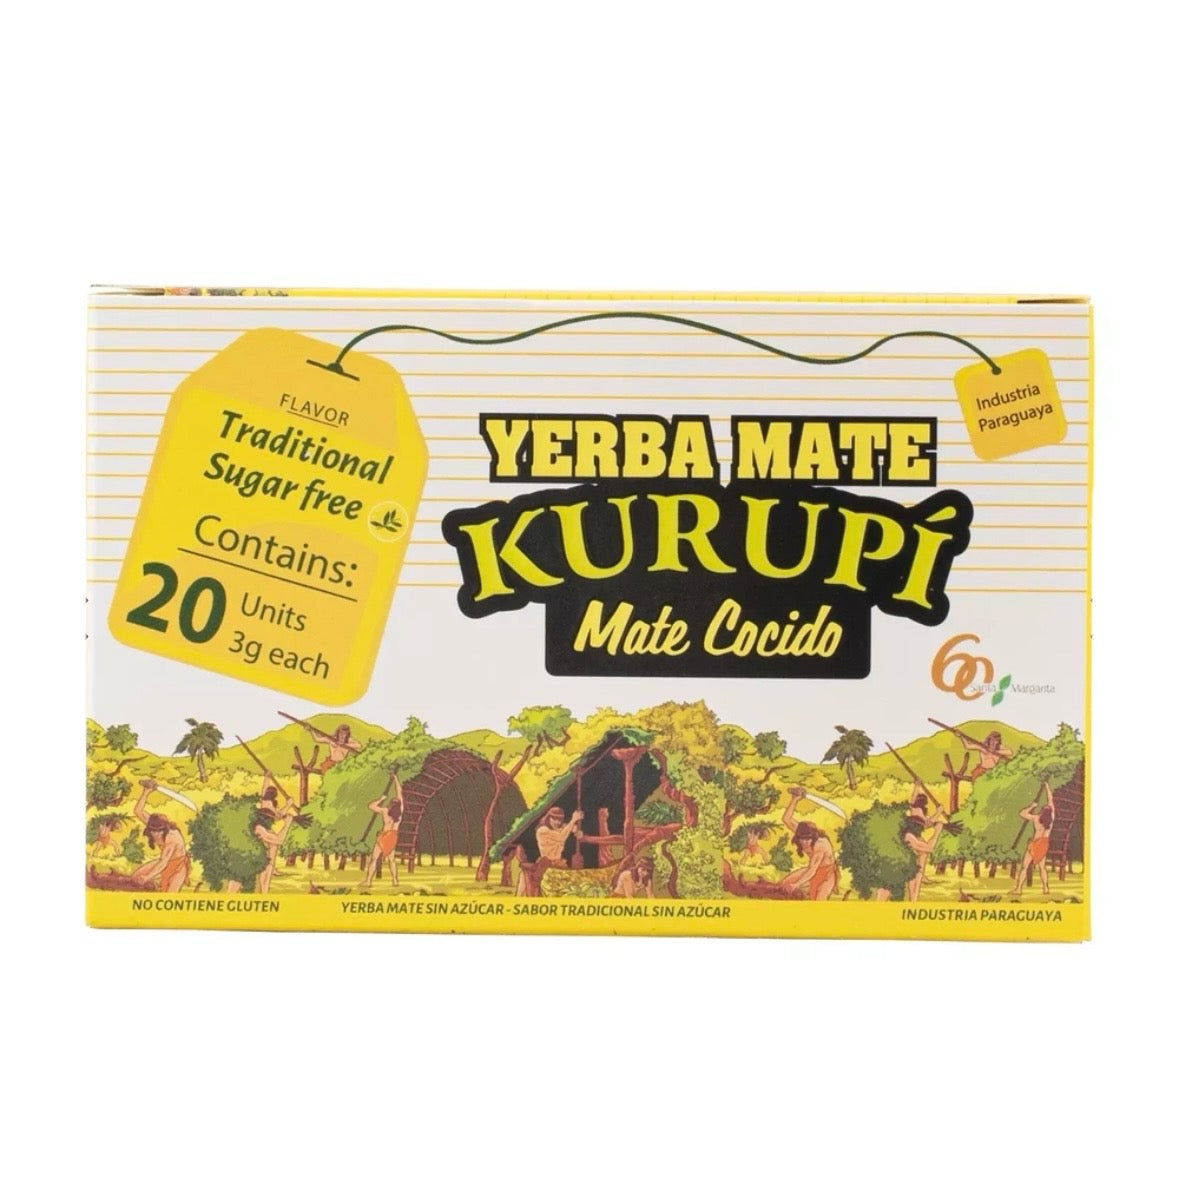 Kurupi Cocido Yerba mate origine Paraguay - Confezione da 20 bustine